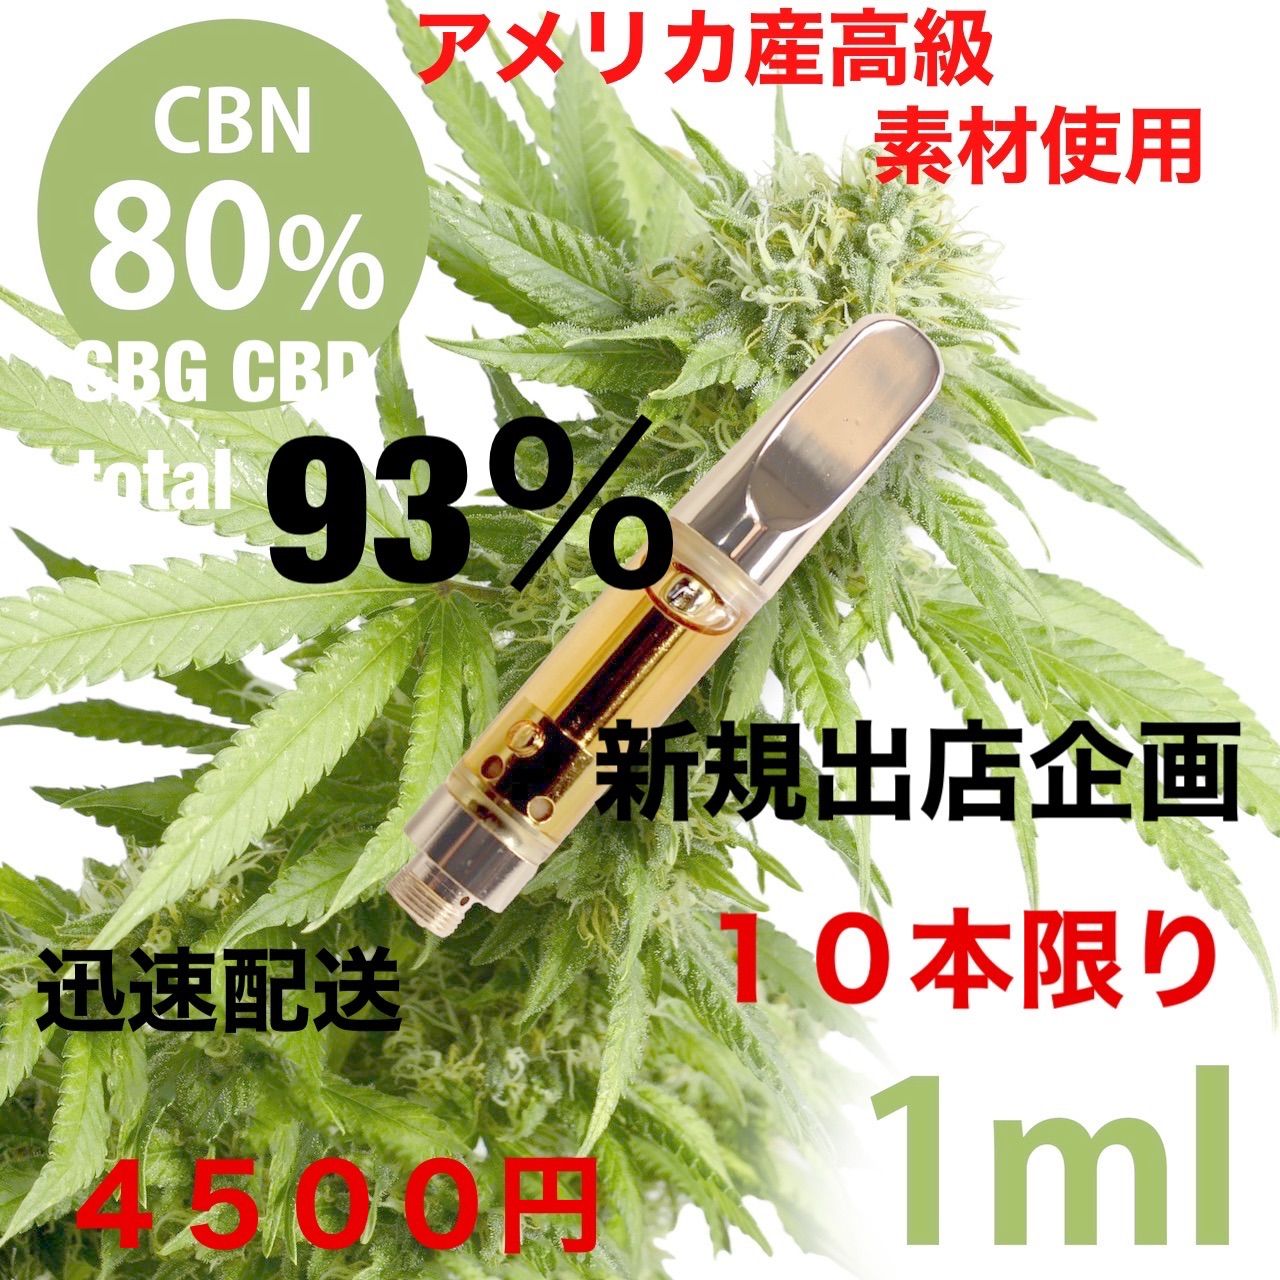 ● 763 CBN 80% リキッド 2本OGKUSH 高級麻由来テルペン使用